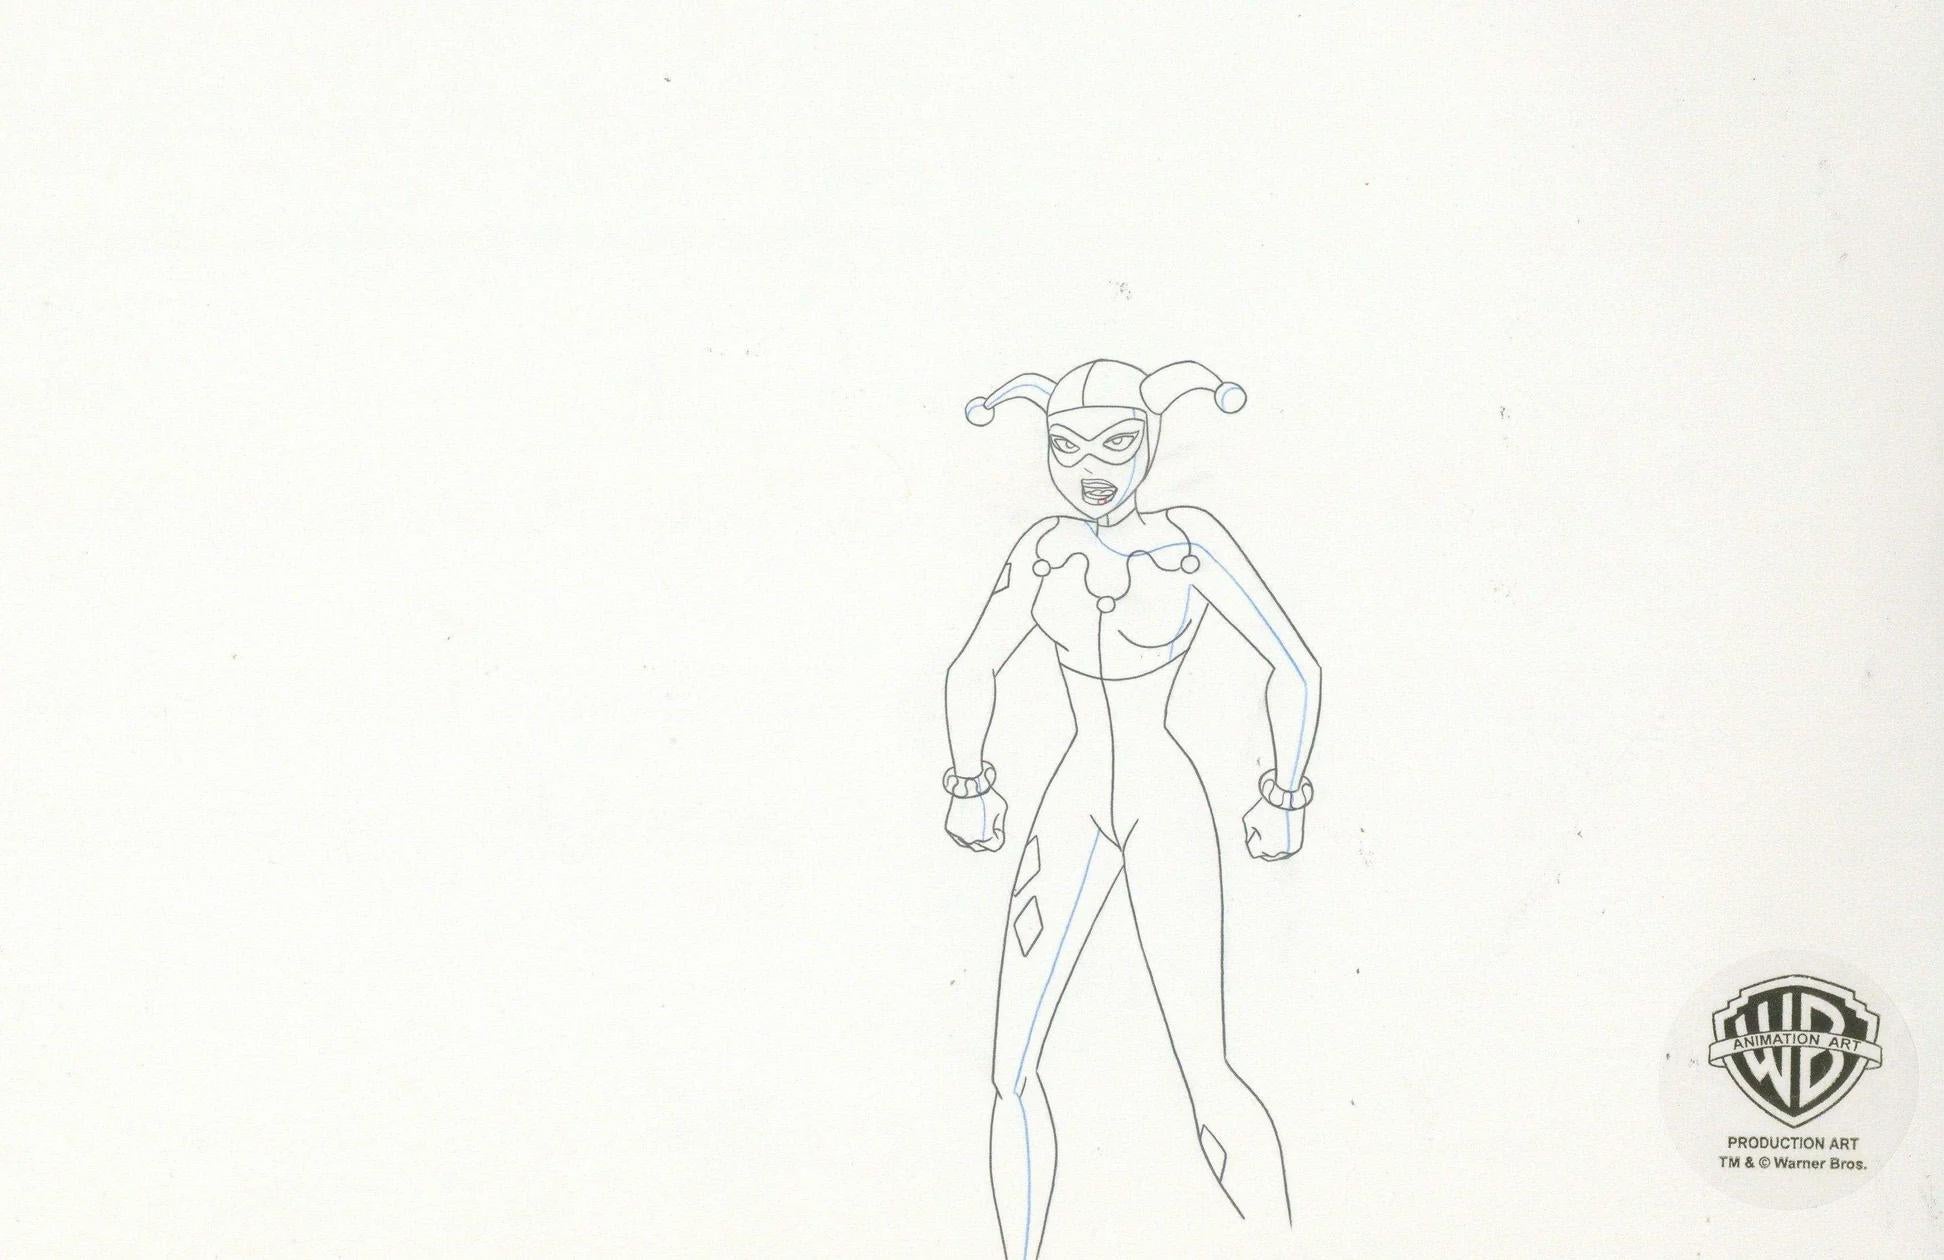 Justice League Original Production Drawing: Harley Quinn - Art by DC Comics Studio Artists